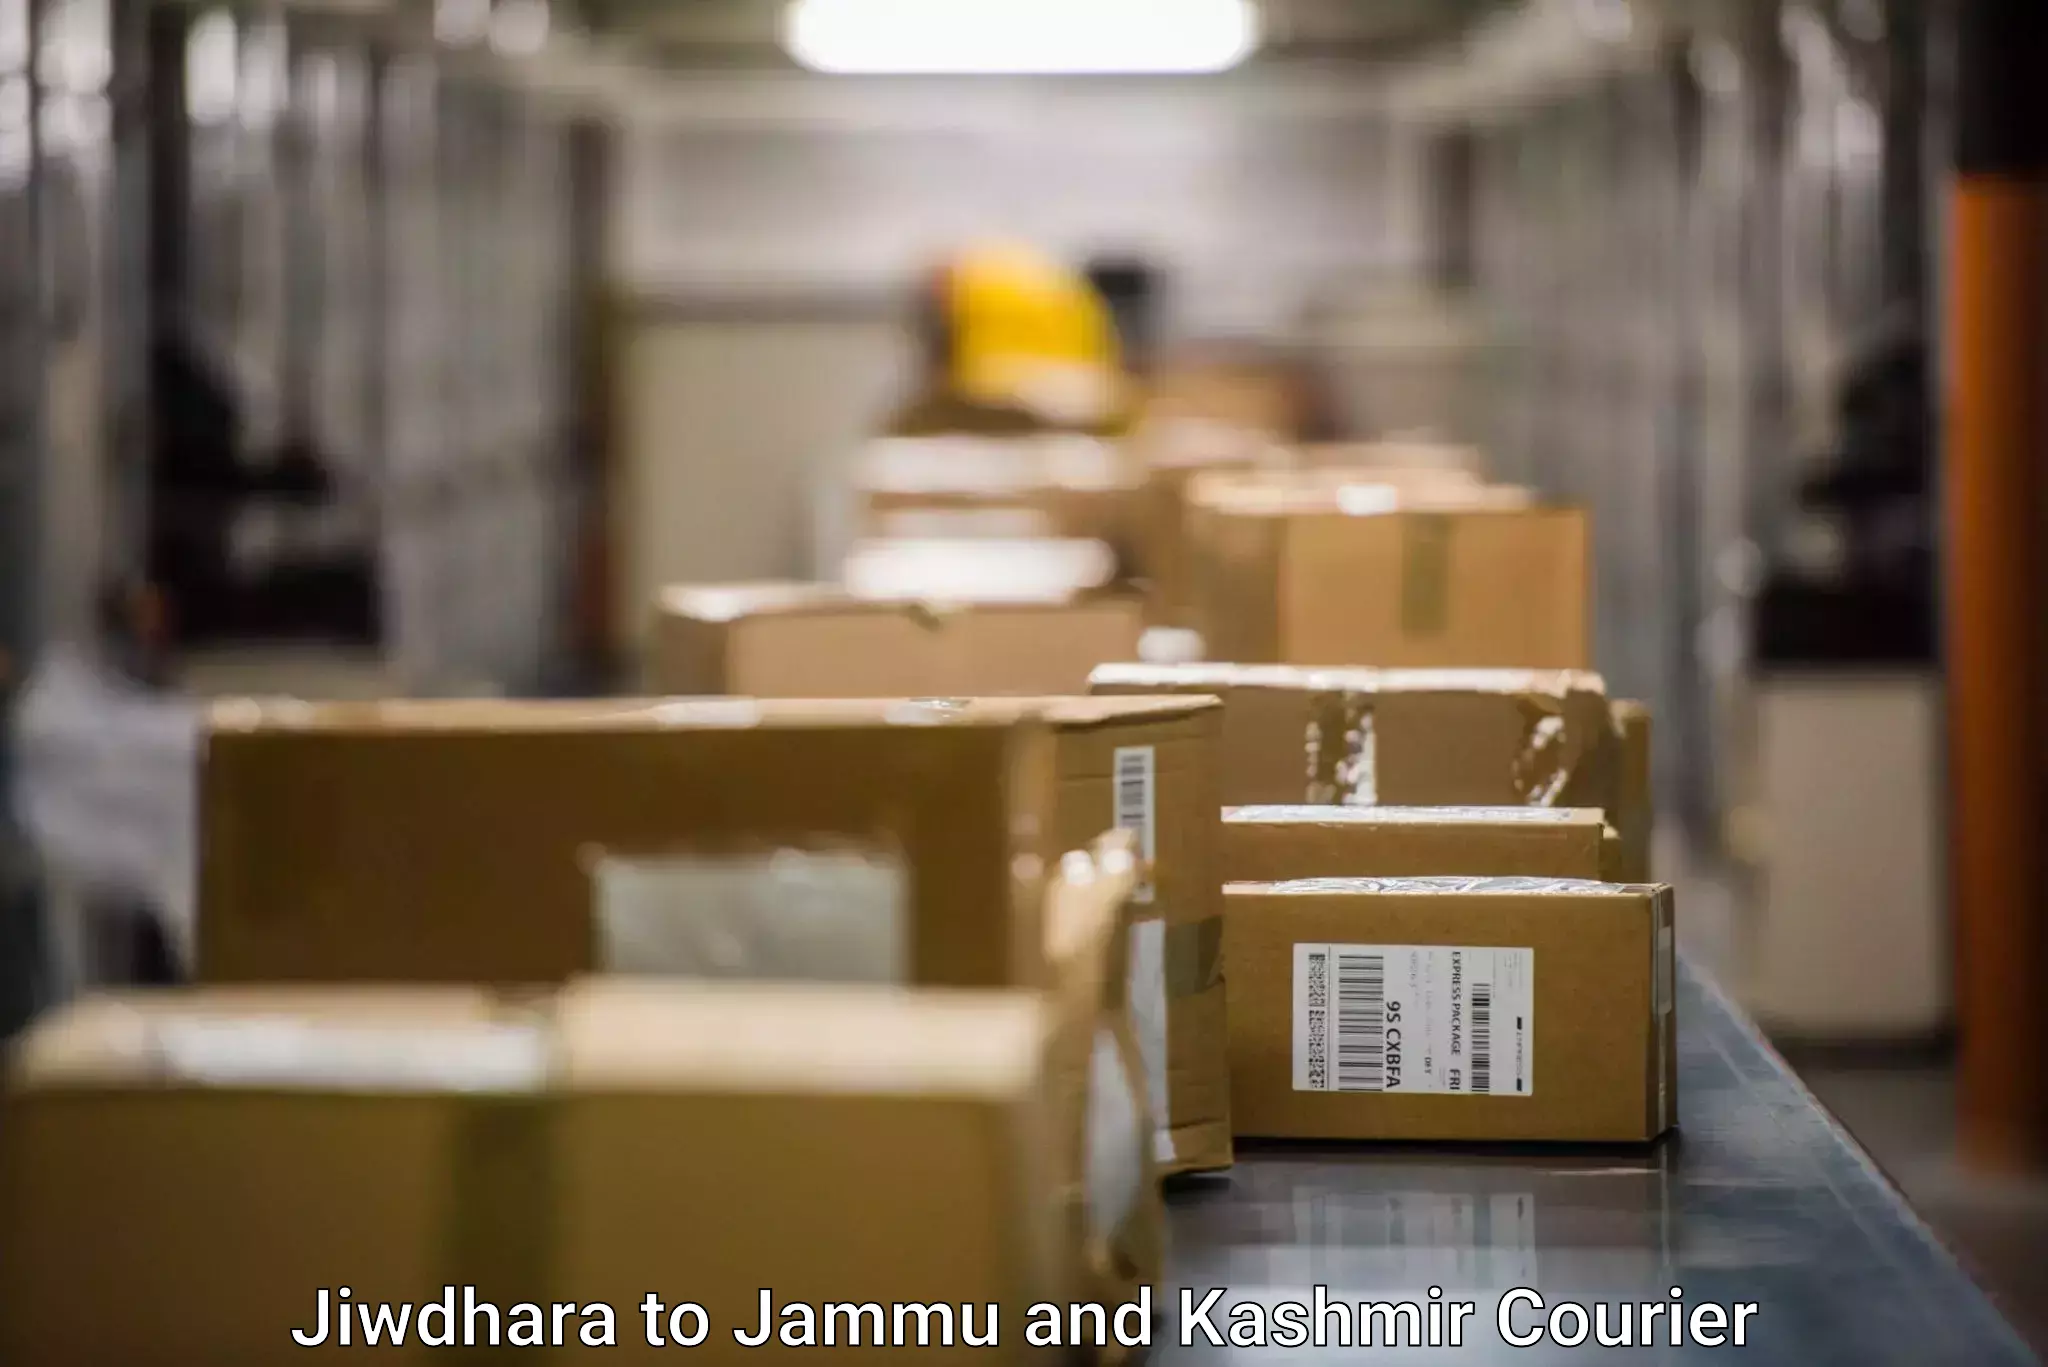 Logistics service provider Jiwdhara to Jammu and Kashmir